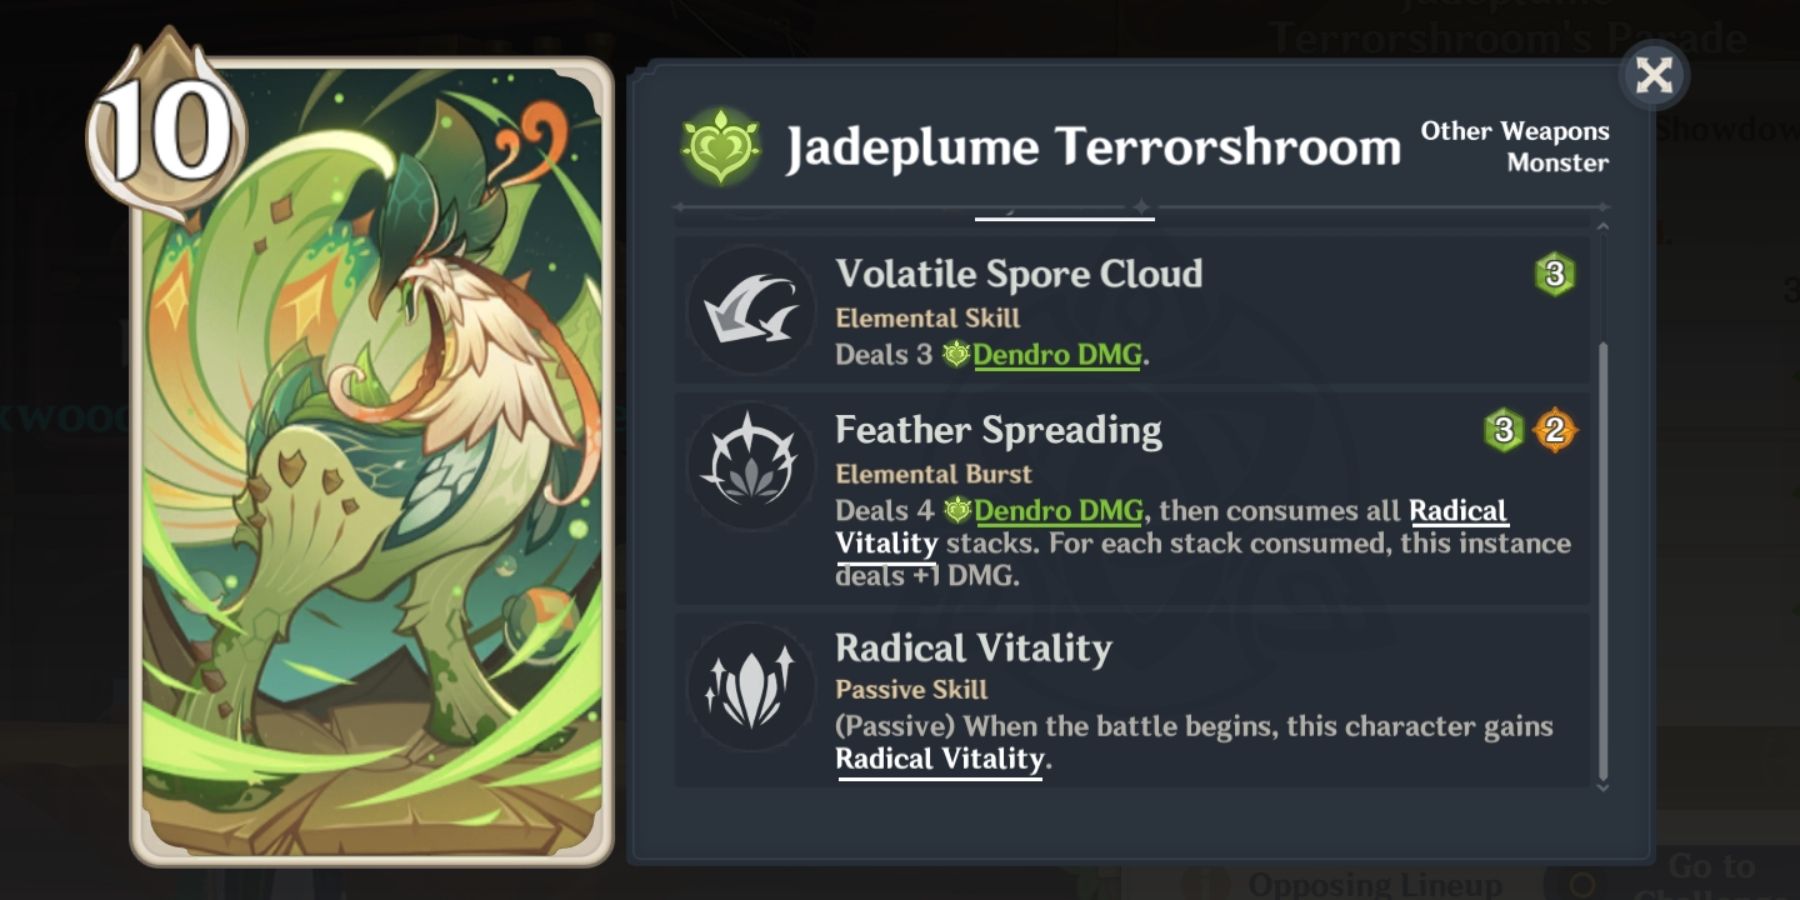 jadeplume terrorshroom card in genshin impact